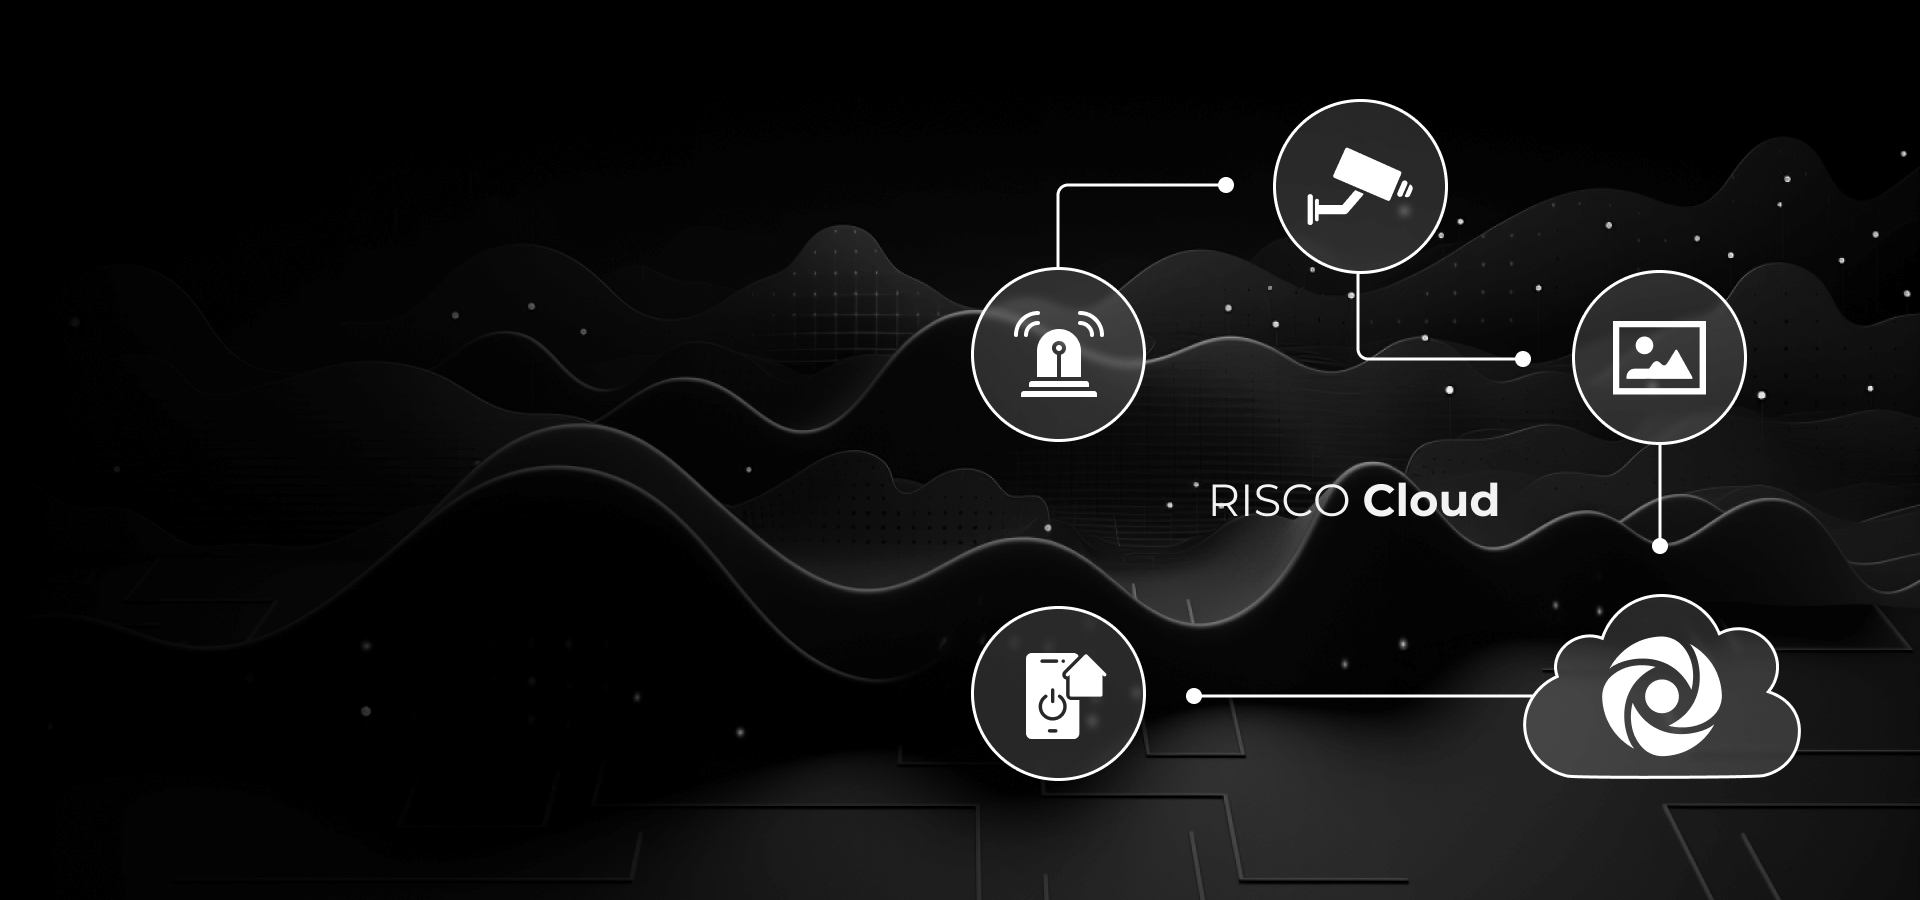 VUpoint Video Solution - RISCO Cloud Desktop